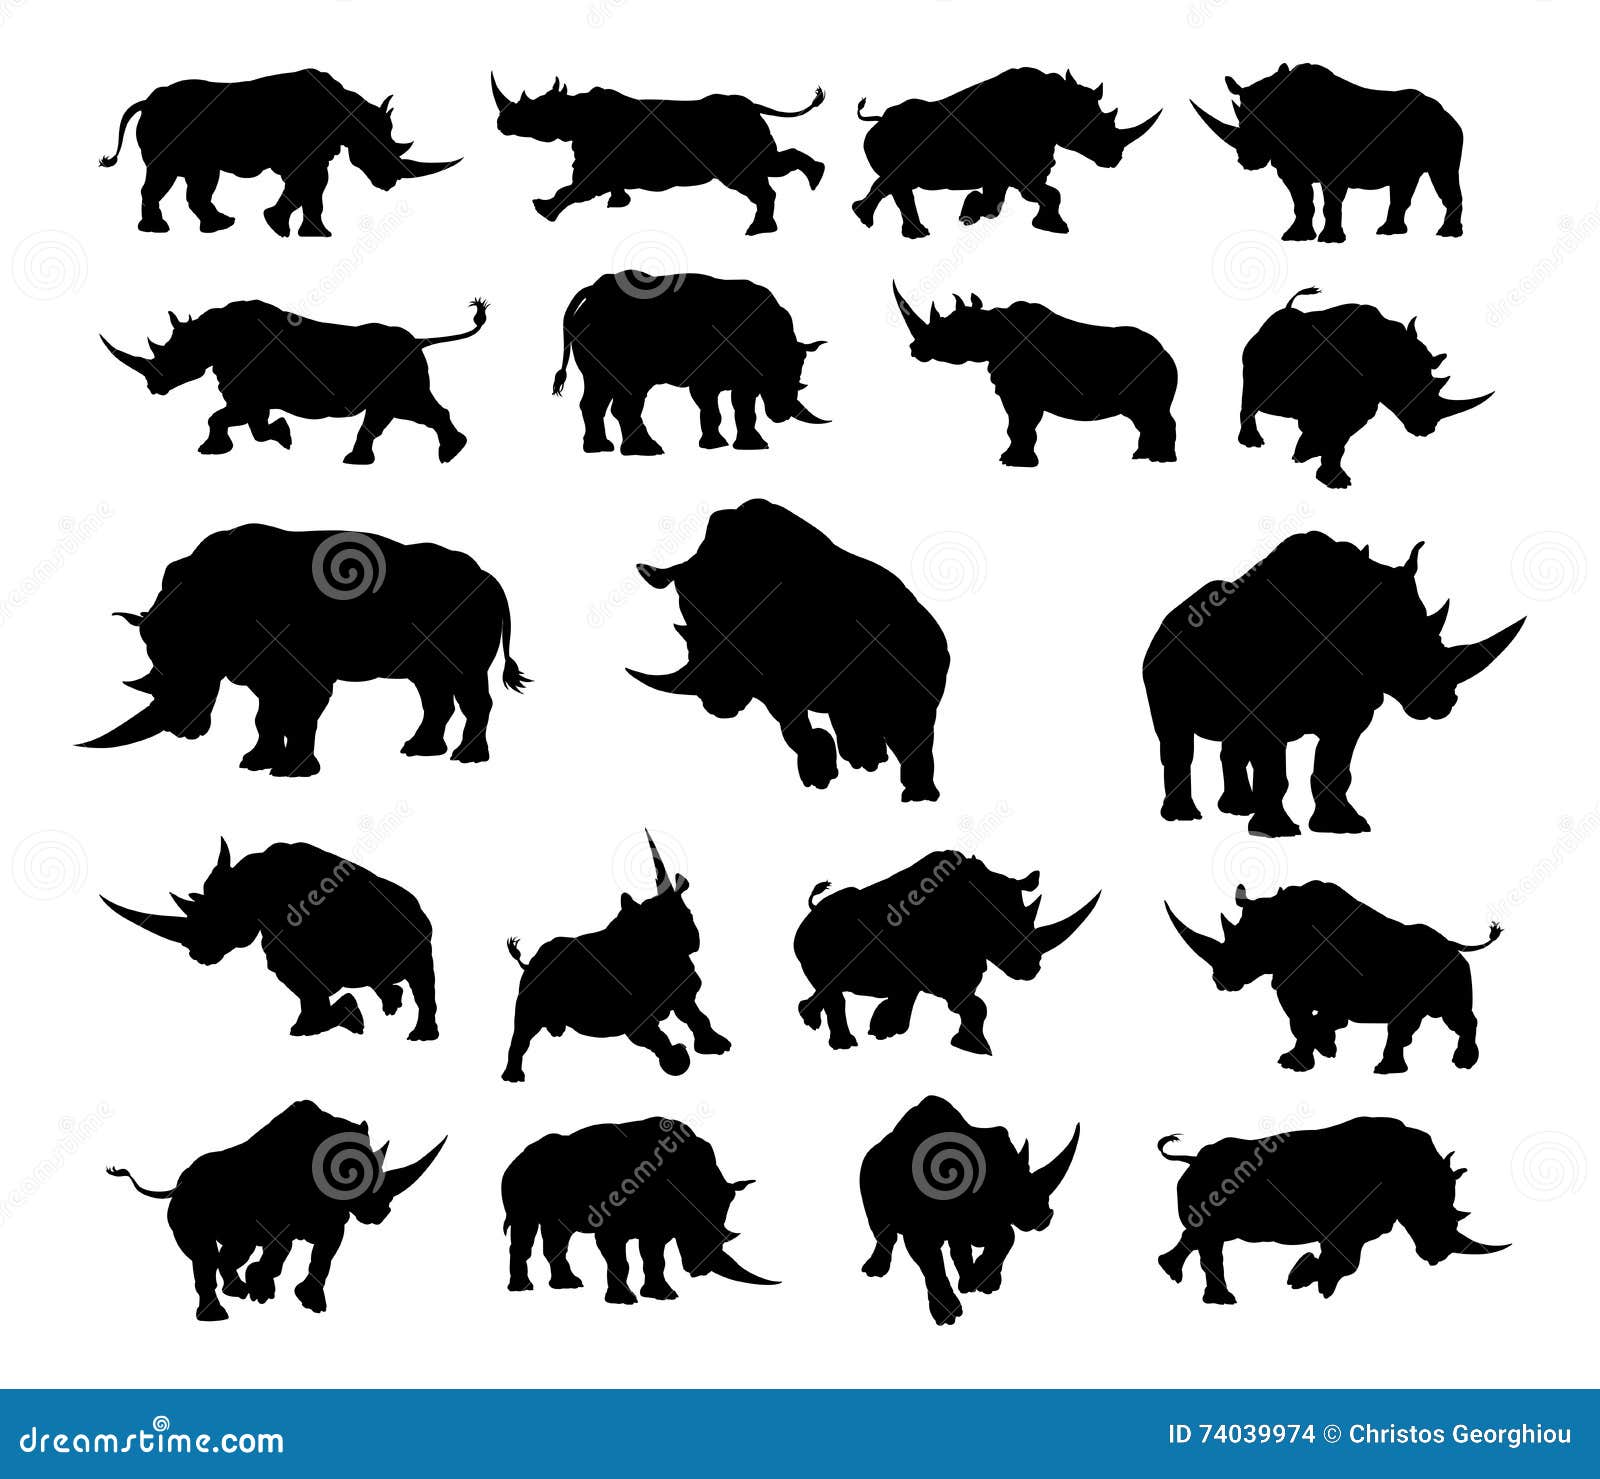 rhino animal silhouettes